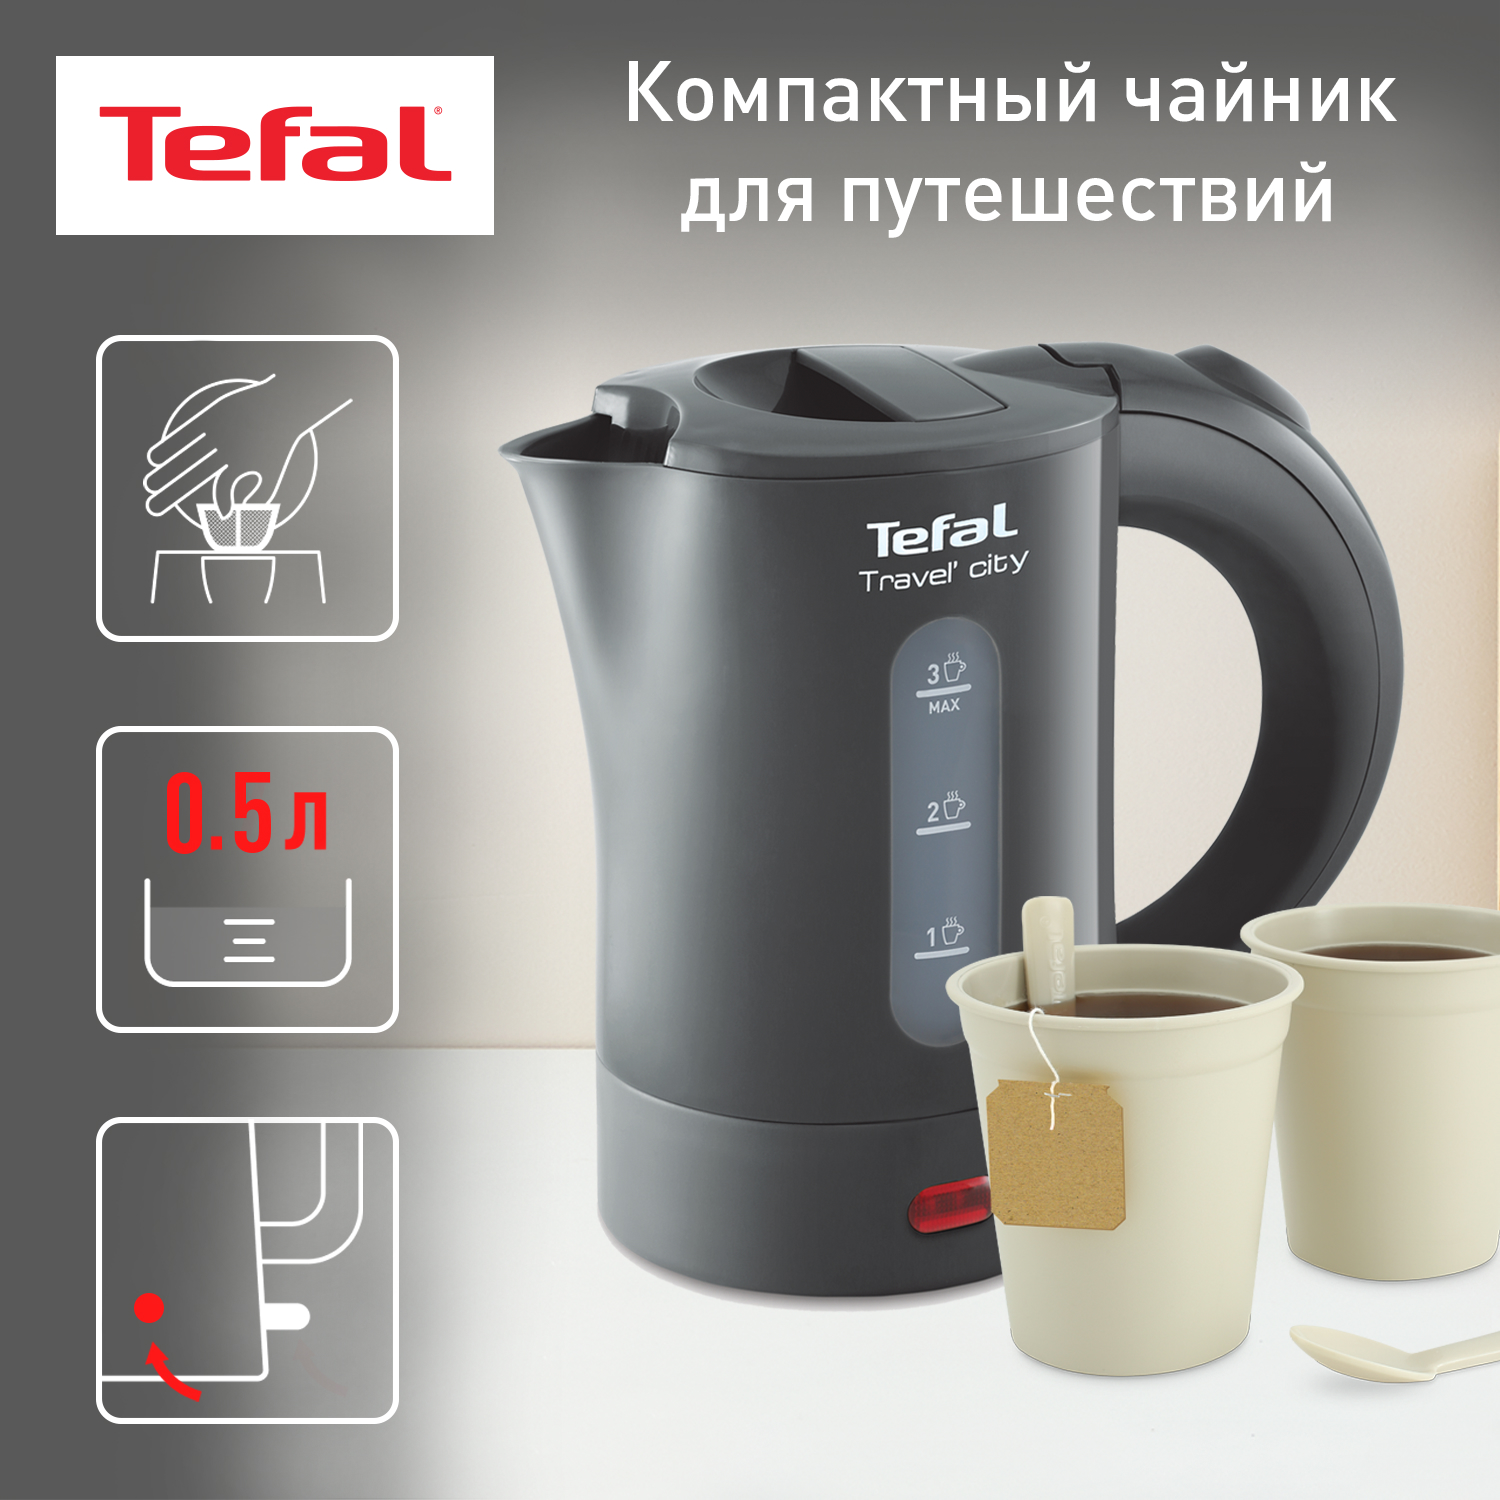 Электрический чайник Tefal Travel